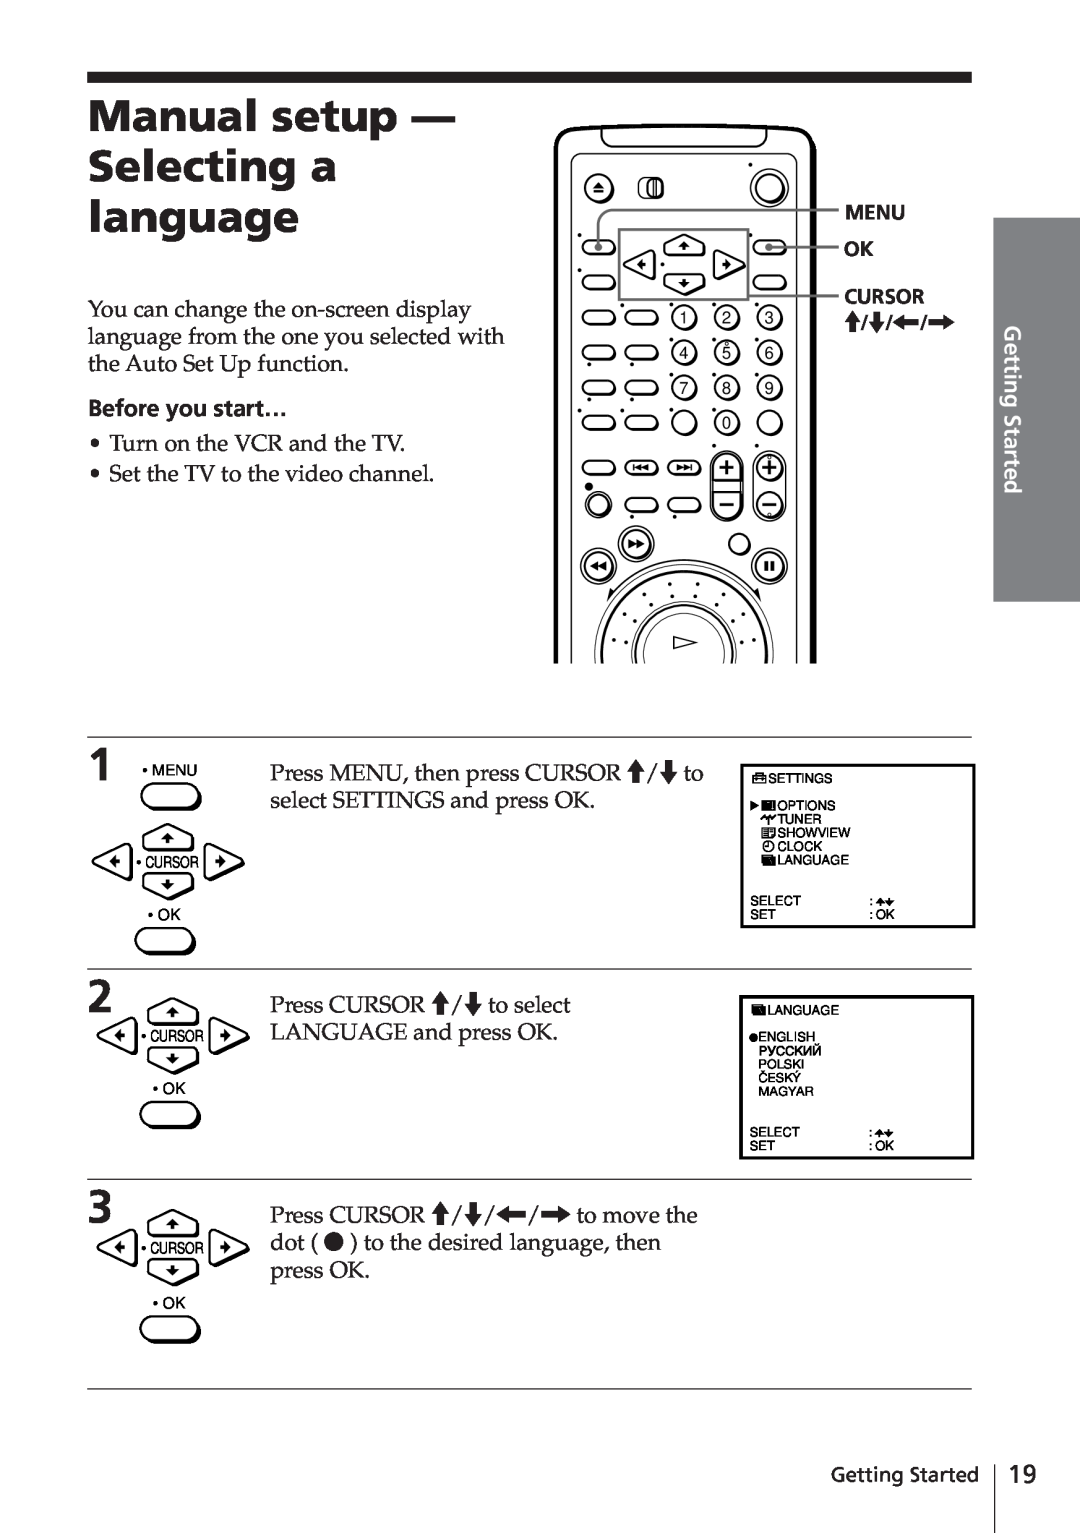 Sony SLV-E580EG manual Manual setup - Selecting a language, Before you start…, Getting Started, Polski Èeský Magyar 